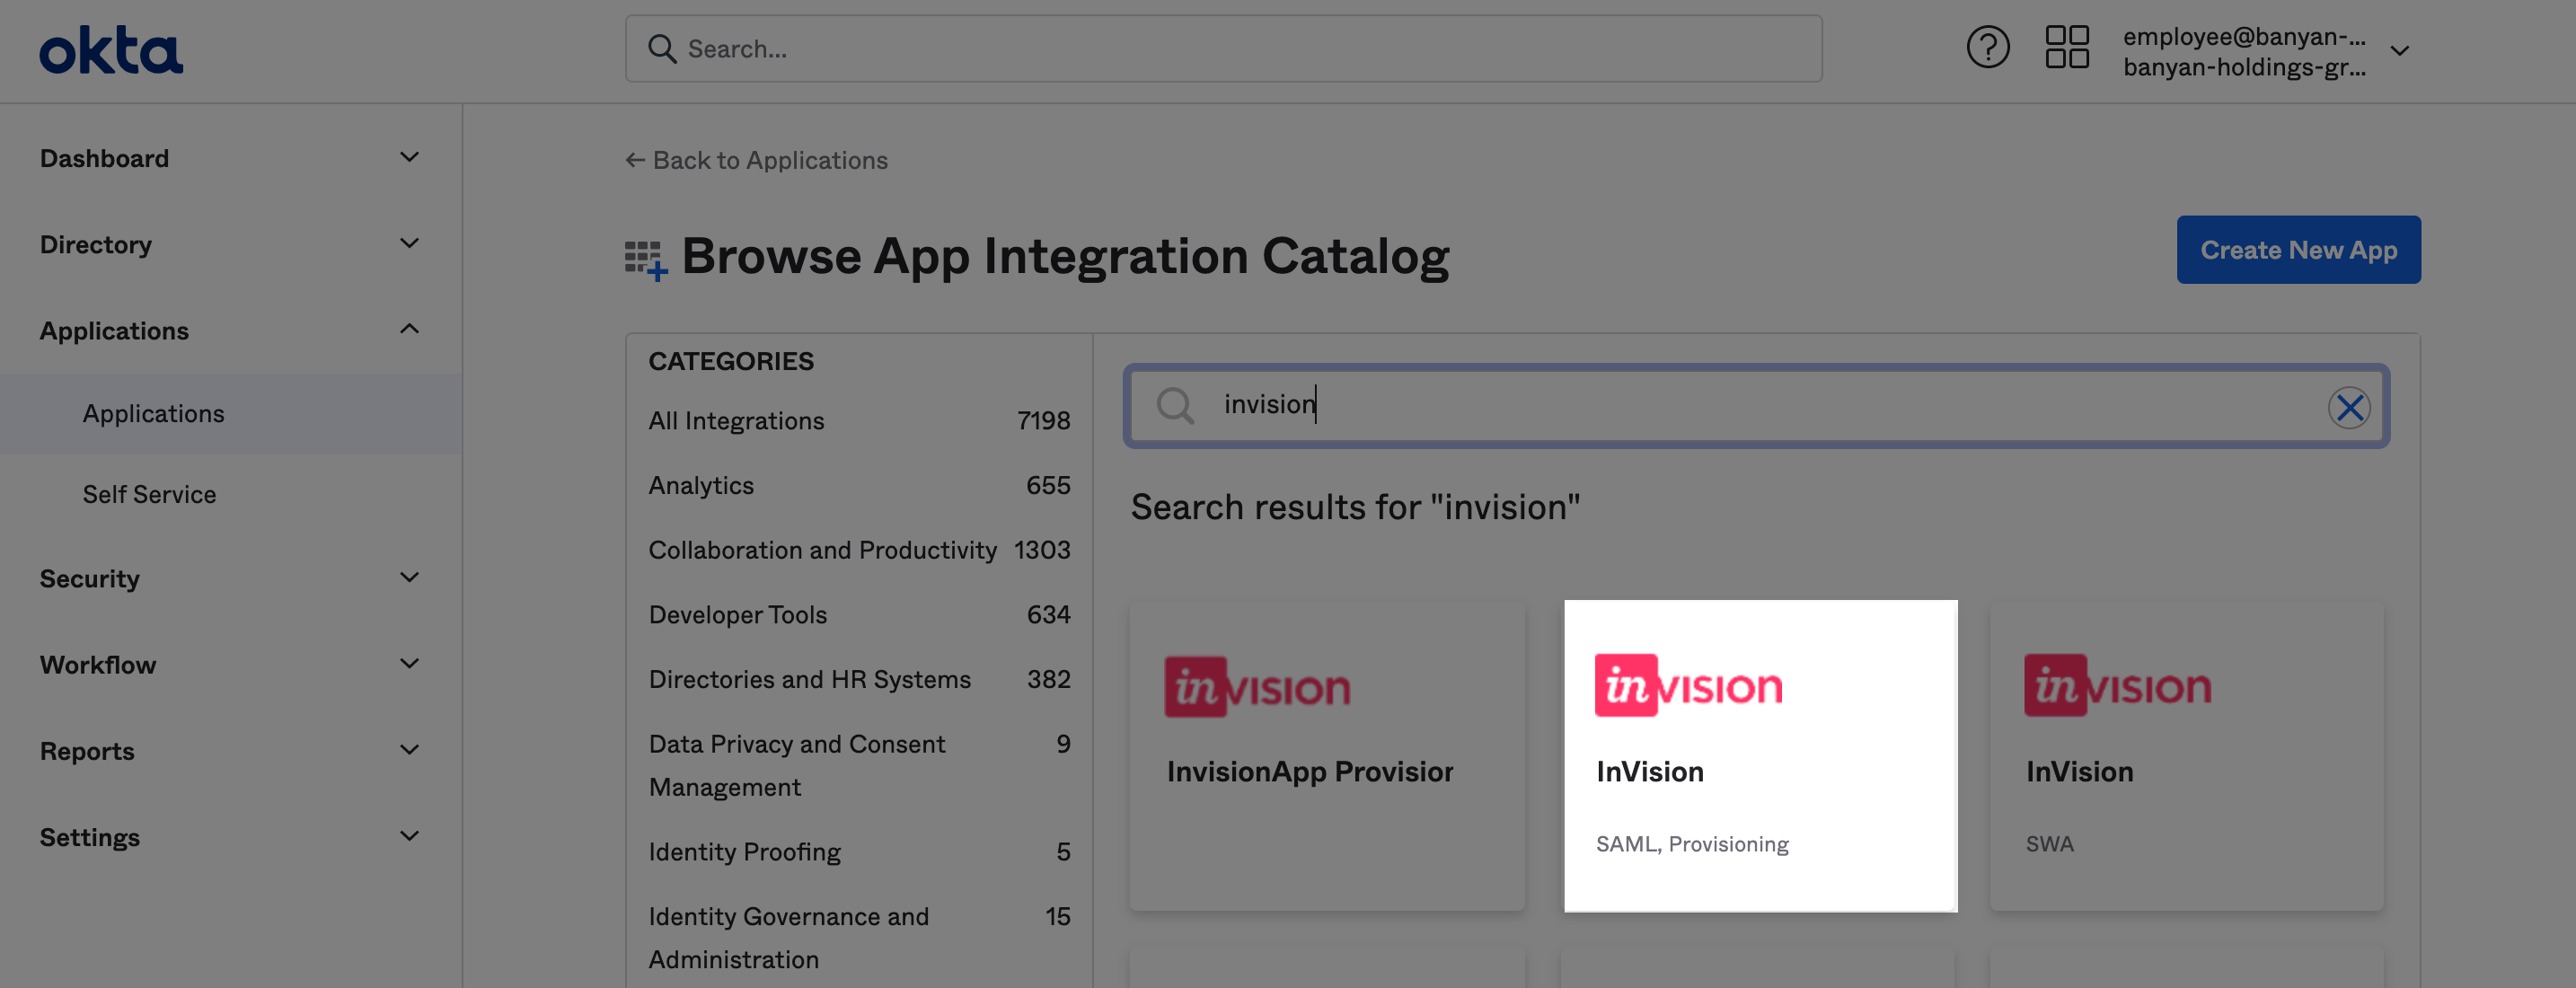 invision-sso-okta-setup-find-invision-in-app-catalog.png